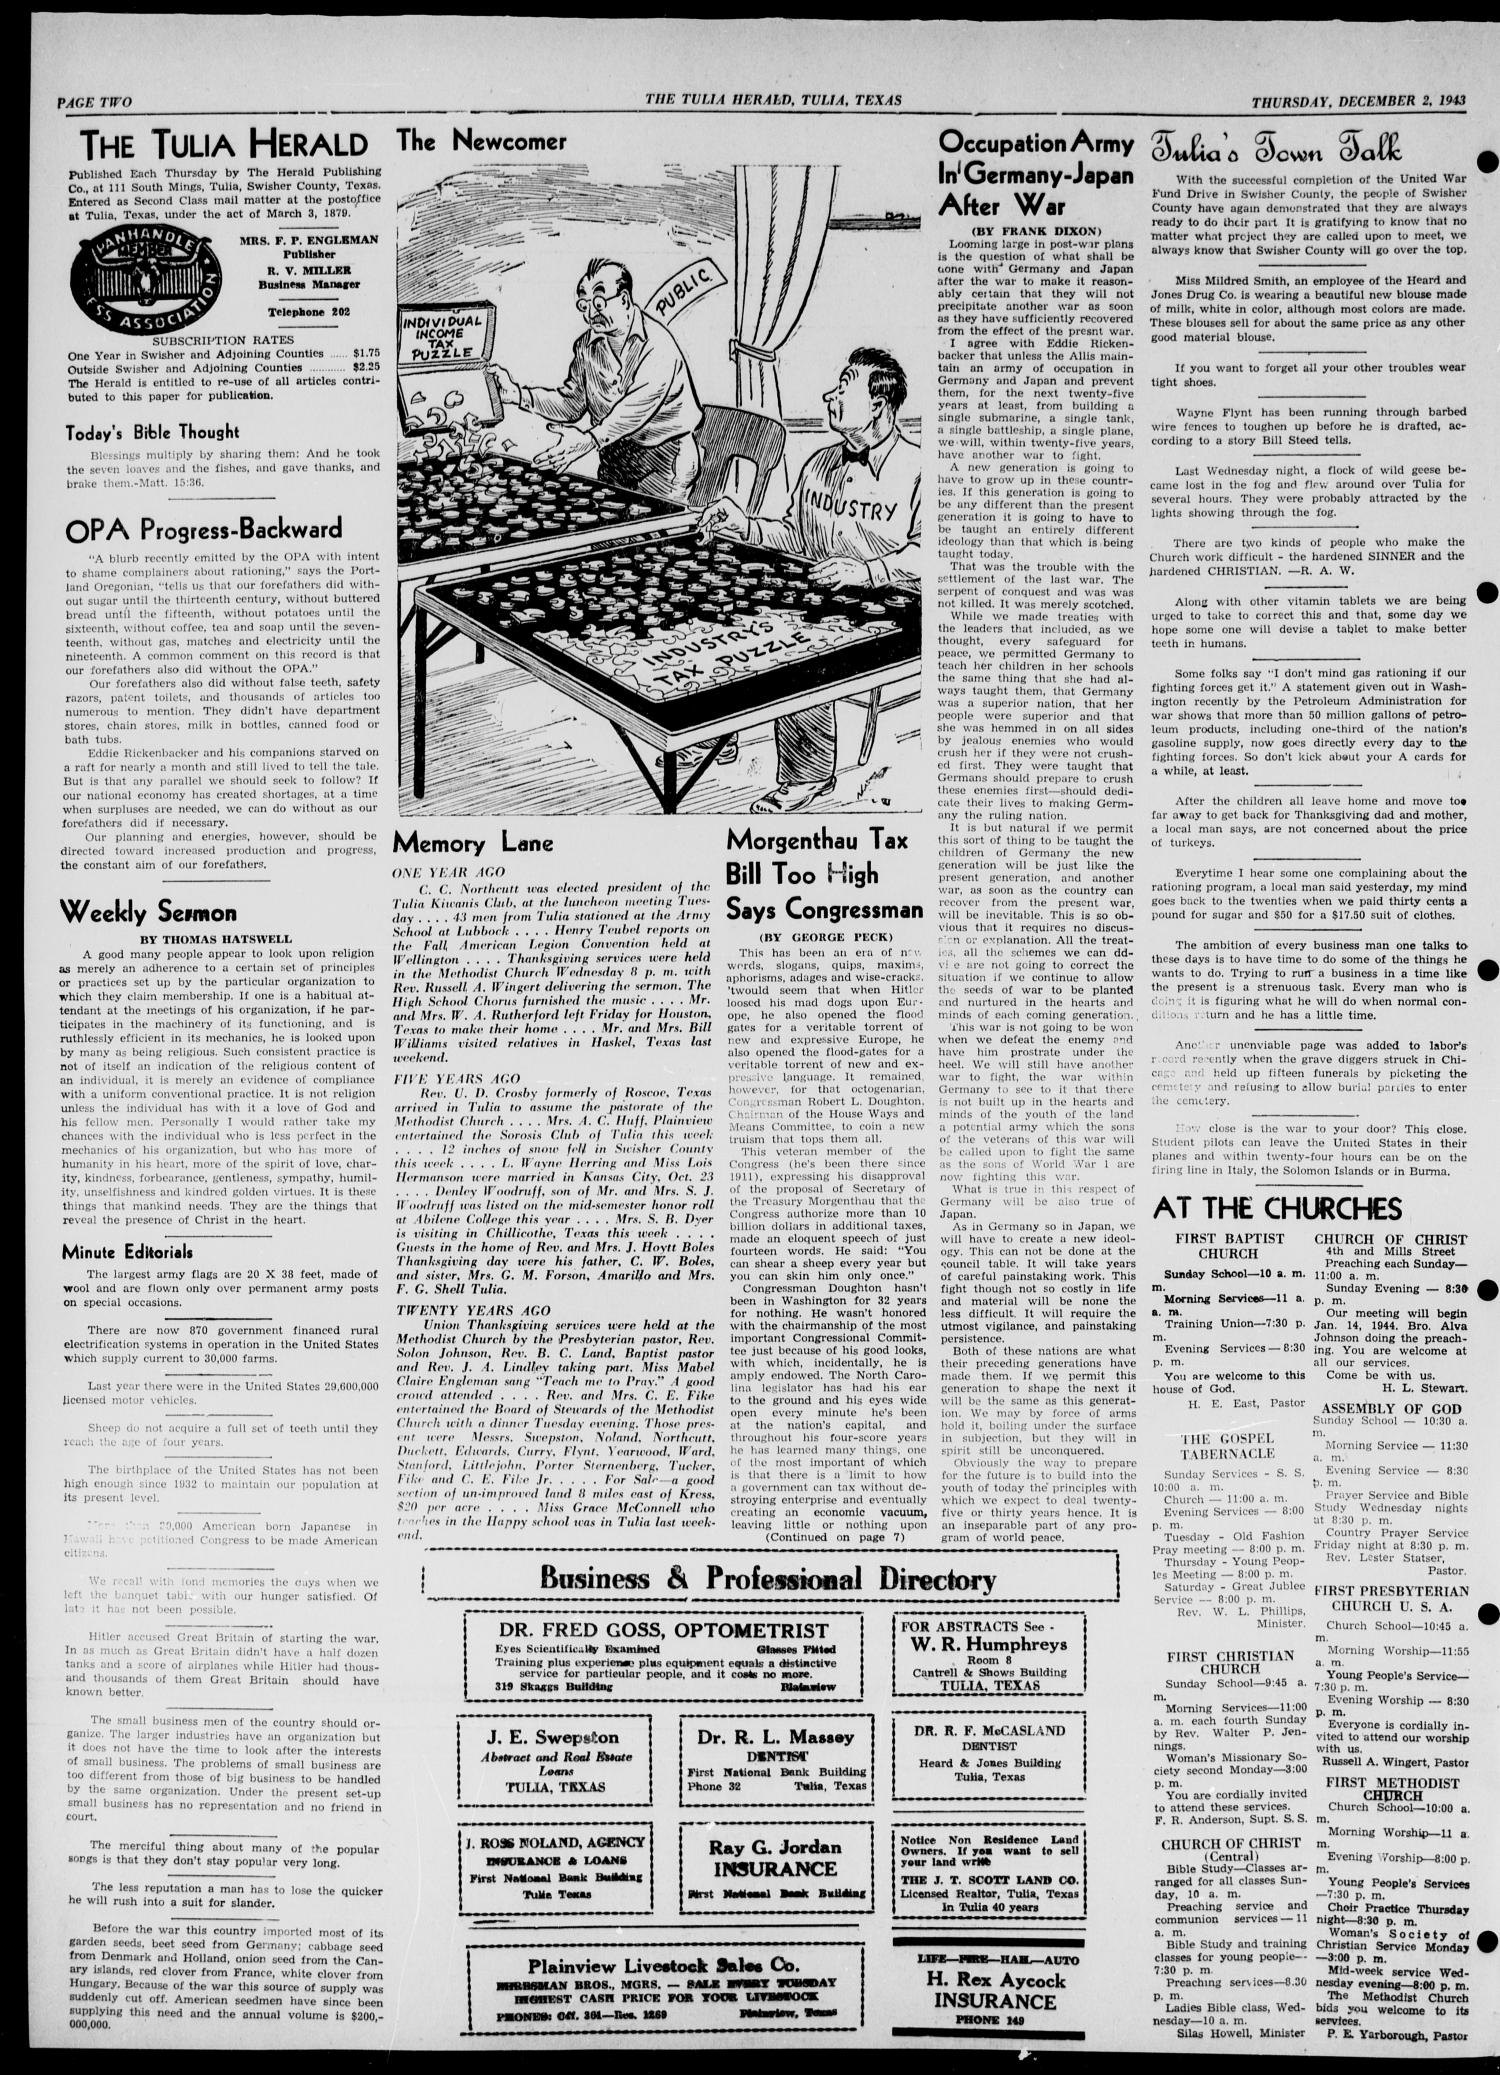 The Tulia Herald (Tulia, Tex), Vol. 34, No. 48, Ed. 1, Thursday, December 2, 1943
                                                
                                                    2
                                                